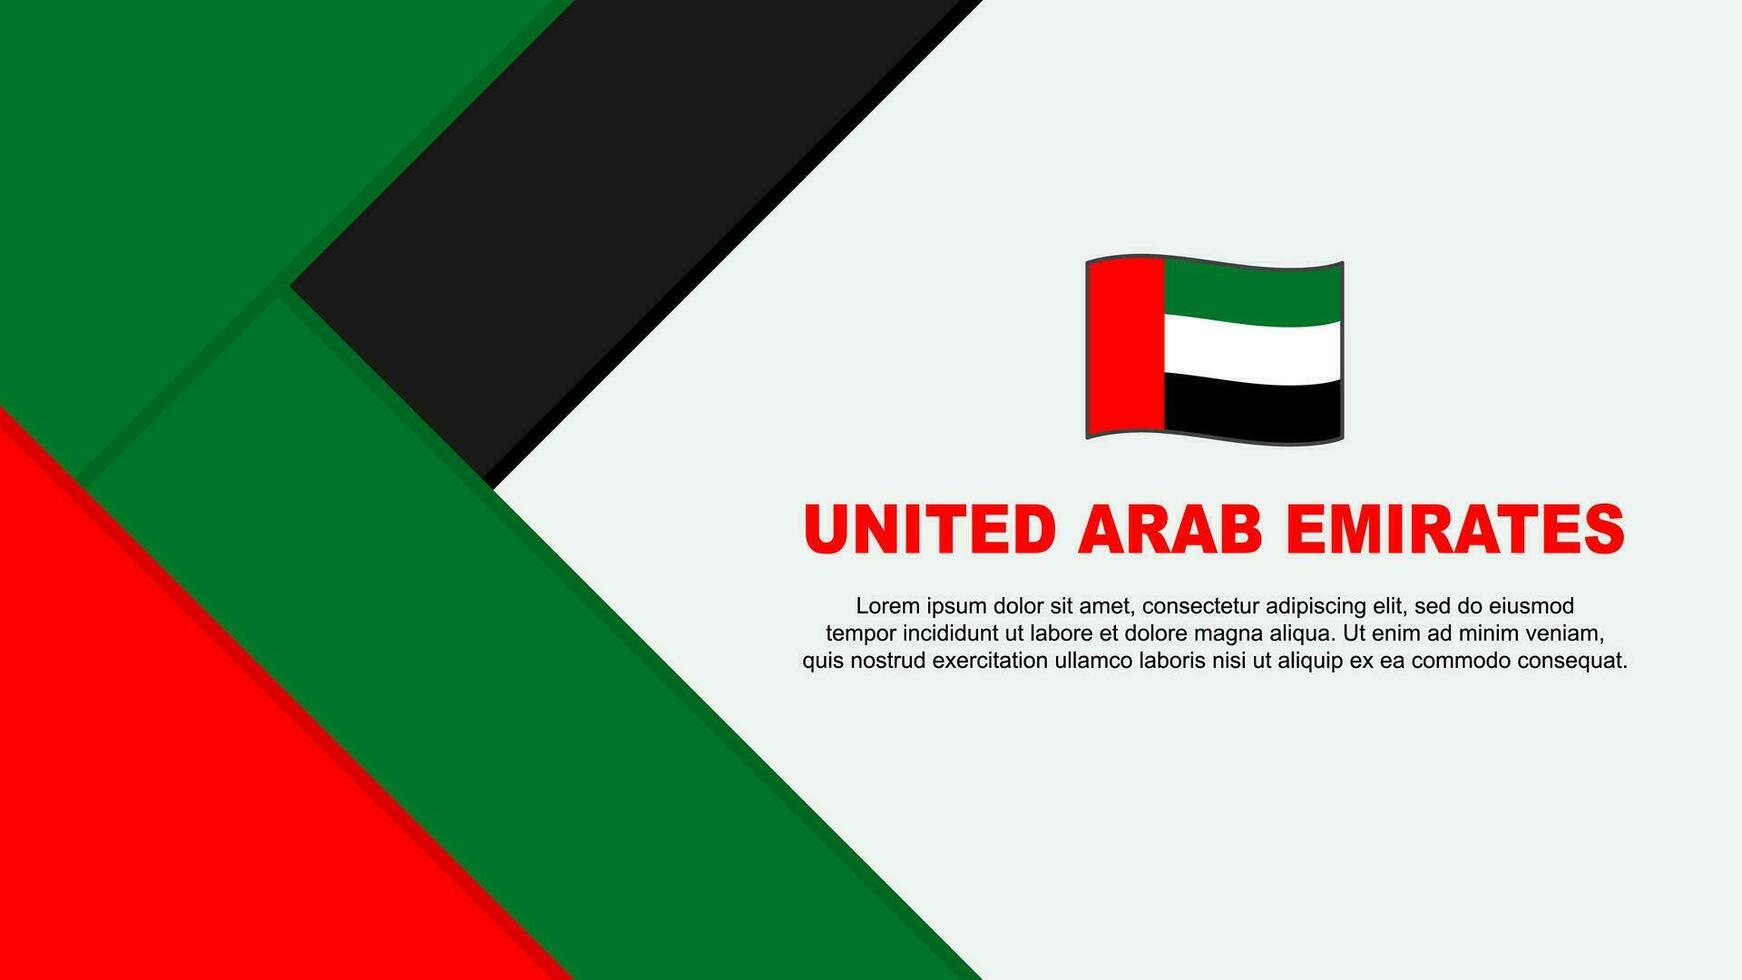 United Arab Emirates Flag Abstract Background Design Template. United Arab Emirates Independence Day Banner Cartoon Vector Illustration. Illustration